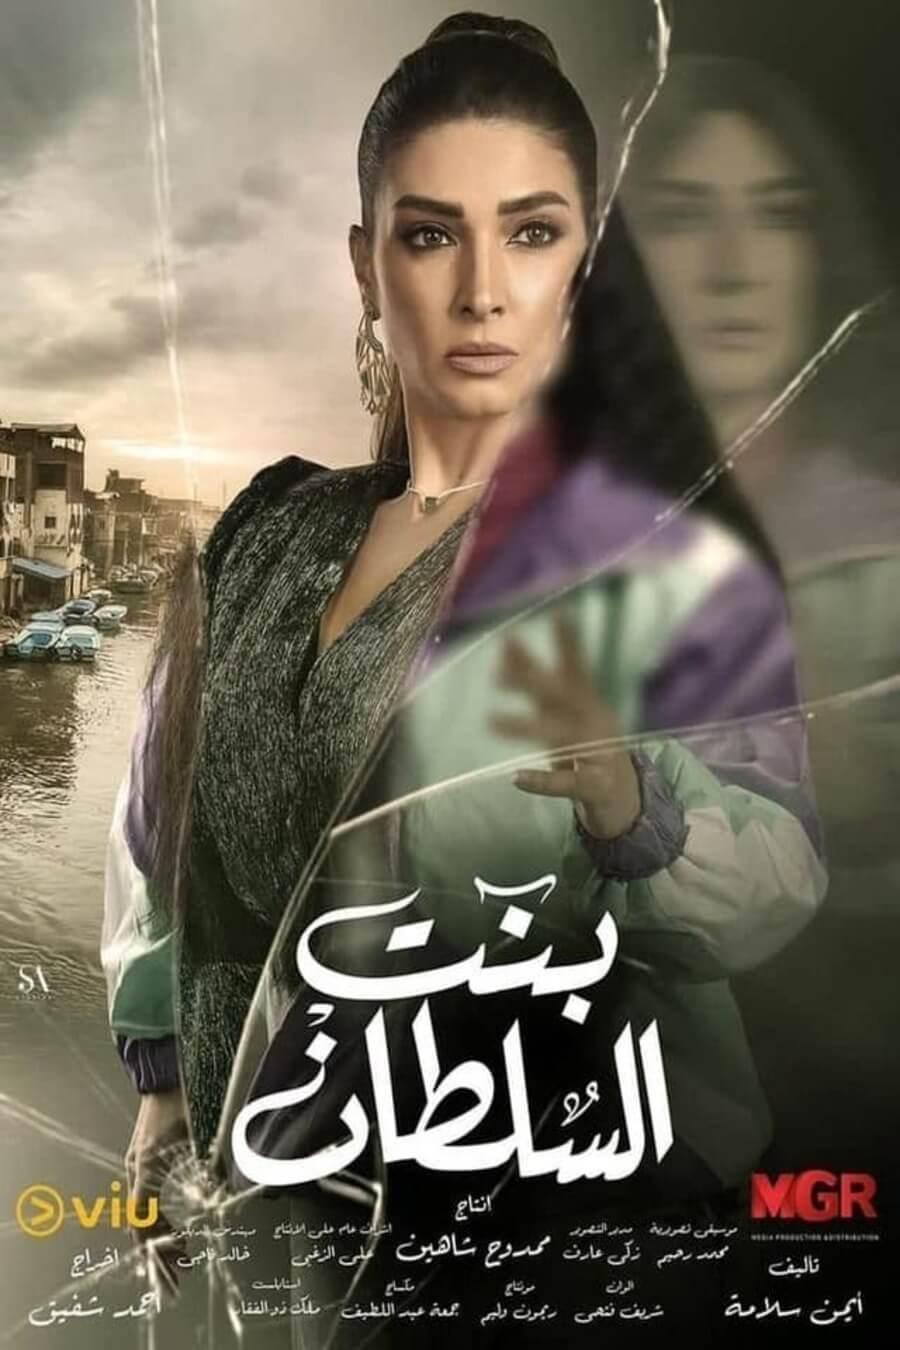 TV ratings for Bint El Sultan (بنت السلطان) in Poland. viu TV series